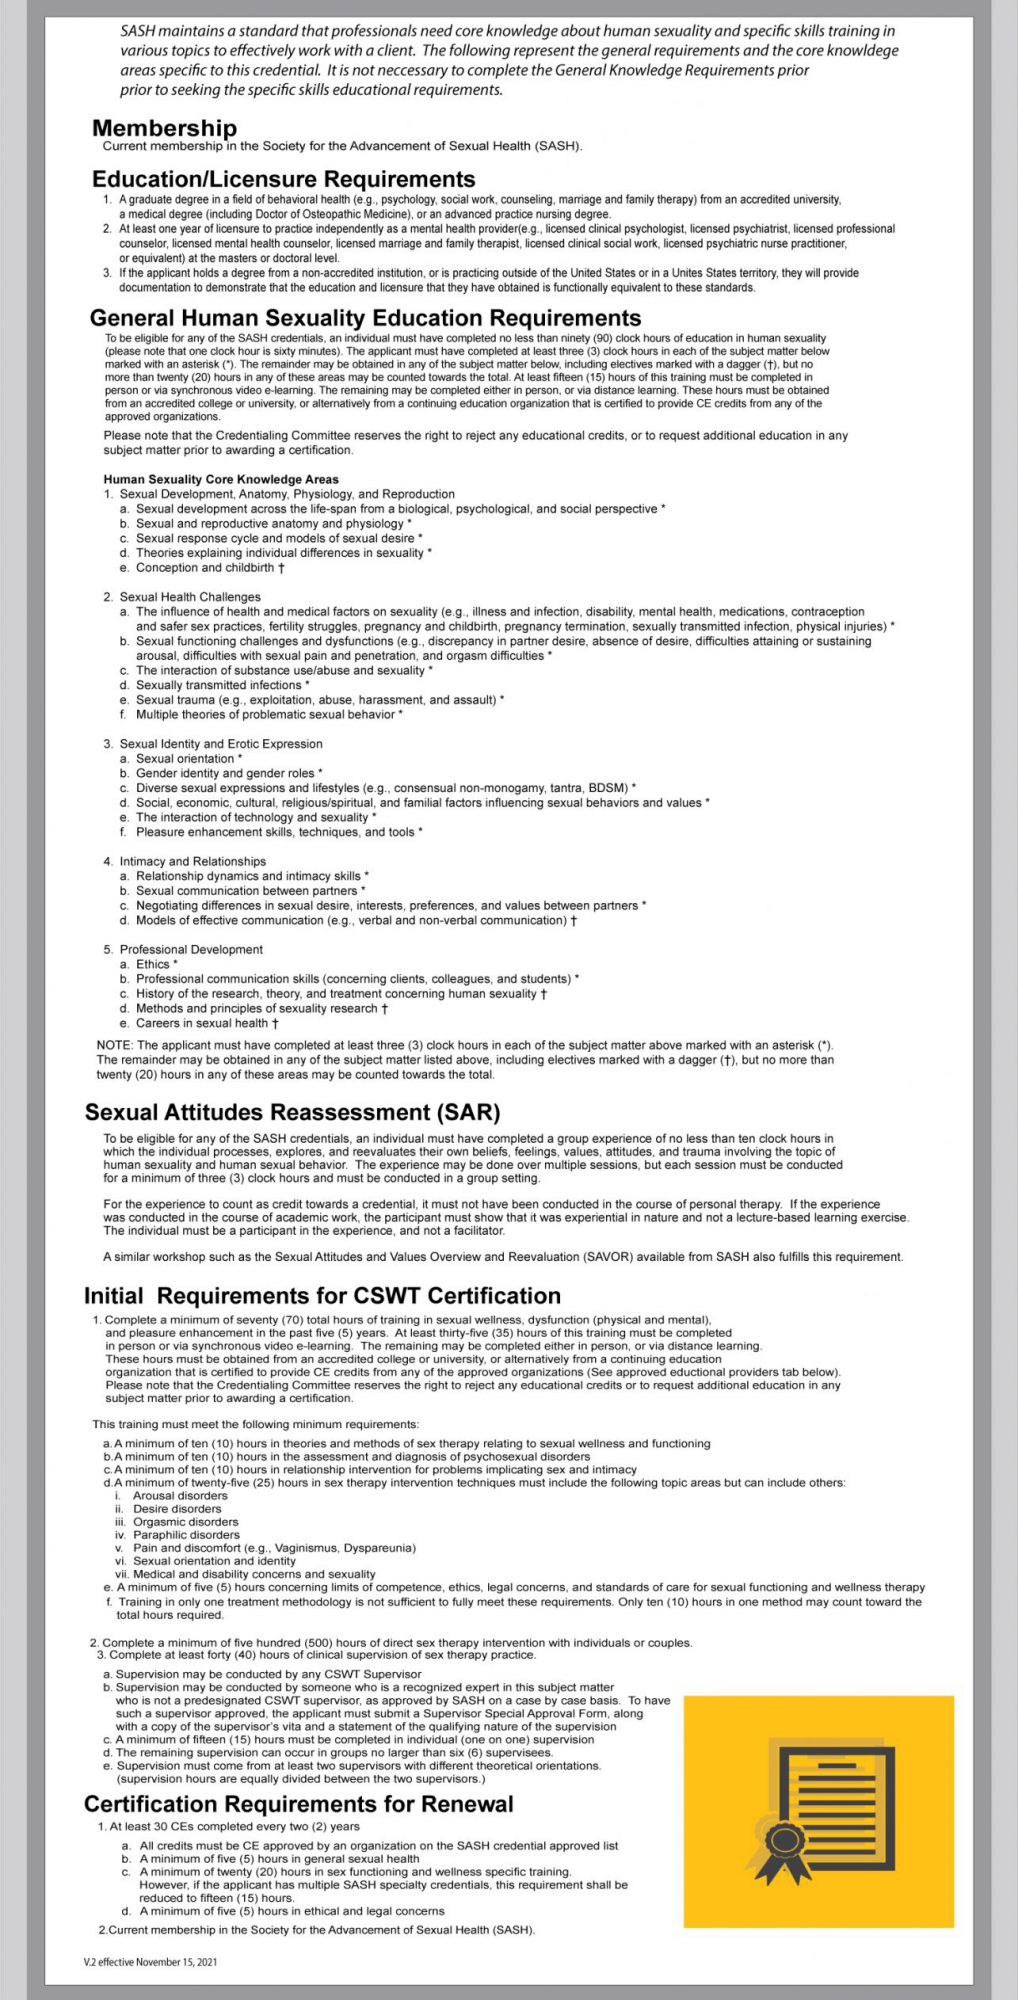 CSWT-requirements-V.2_11.15.21-